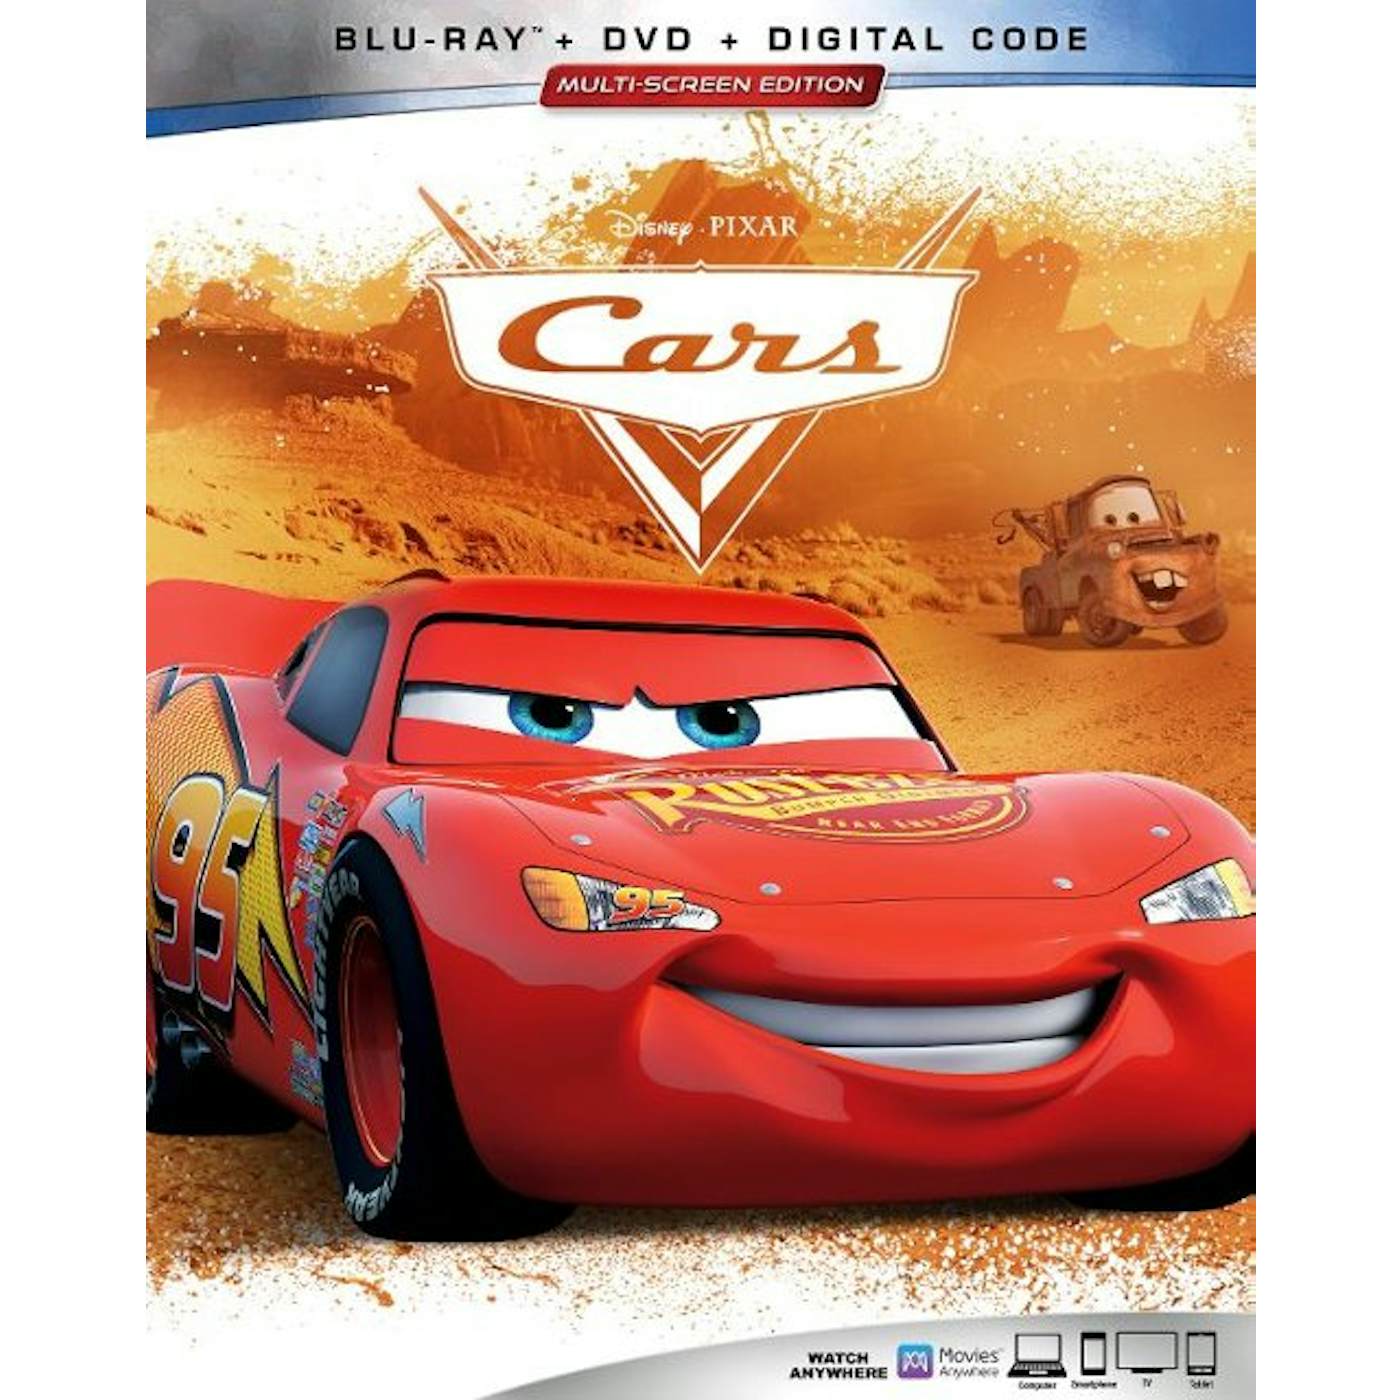 The Cars Blu-ray